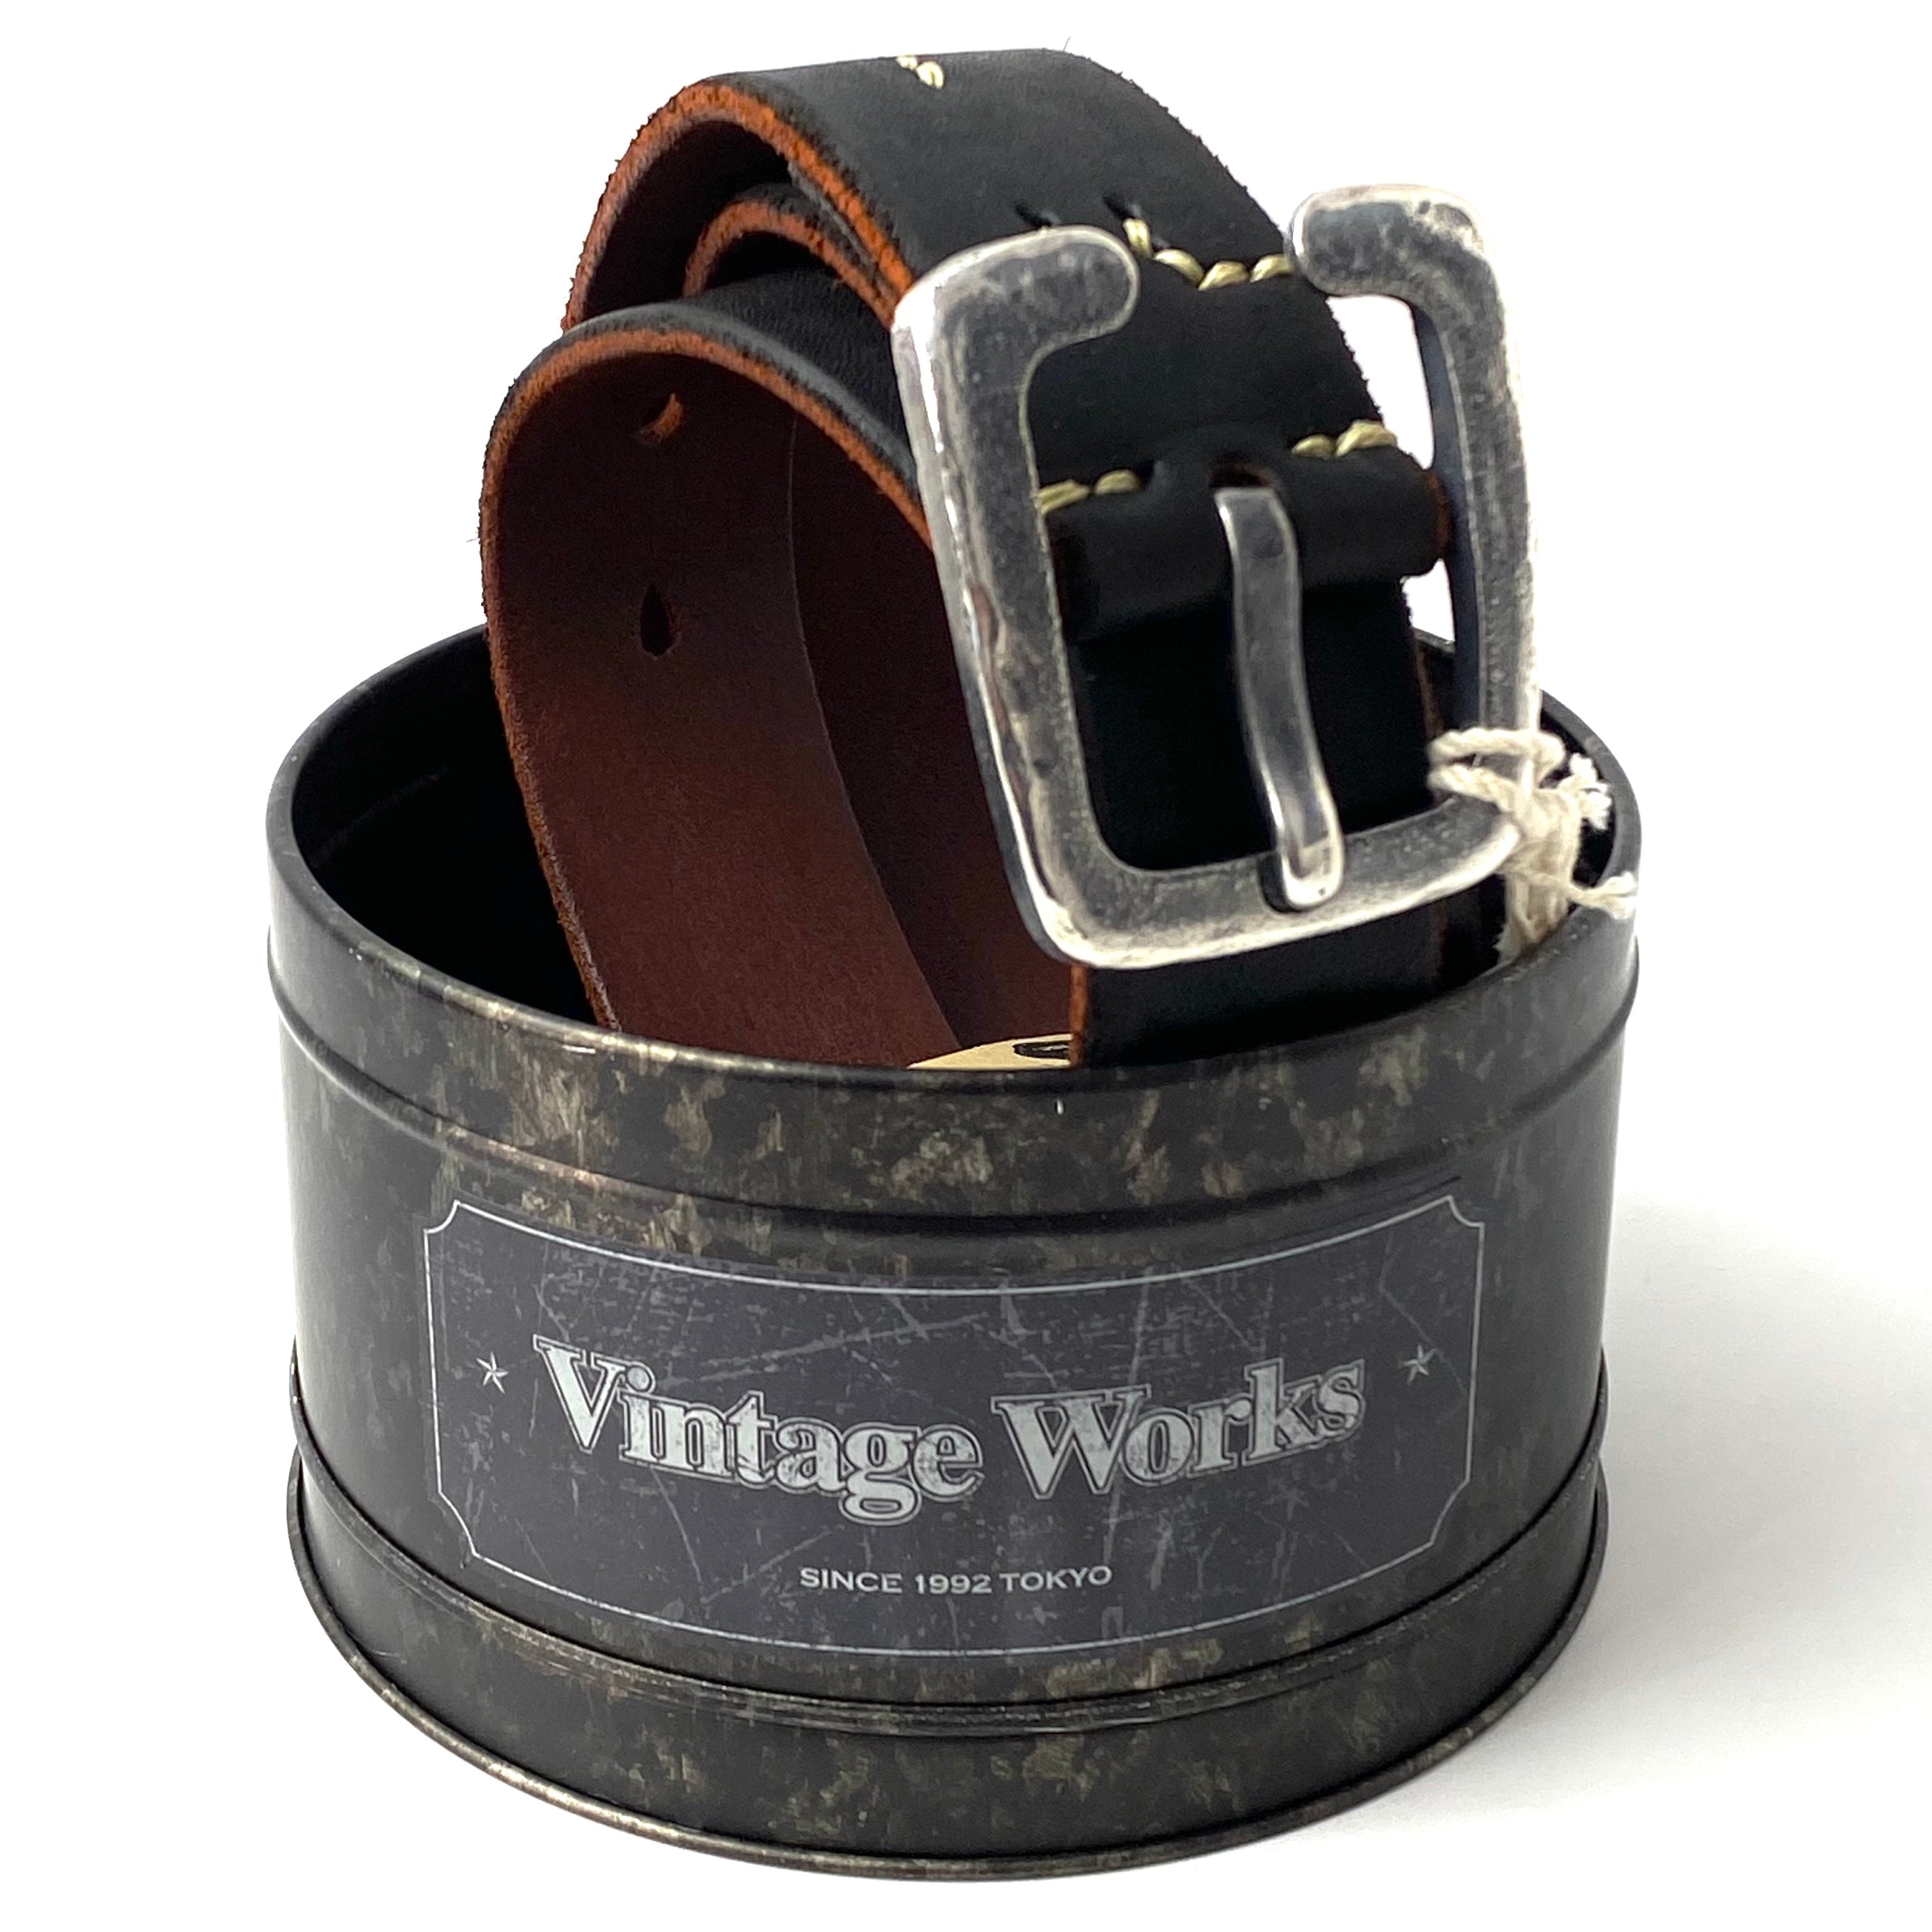 Vintage Works ヴィンテージワークス Leather belt 7Hole レザーベルト 7ホール 茶芯 [DH5536-chasin]